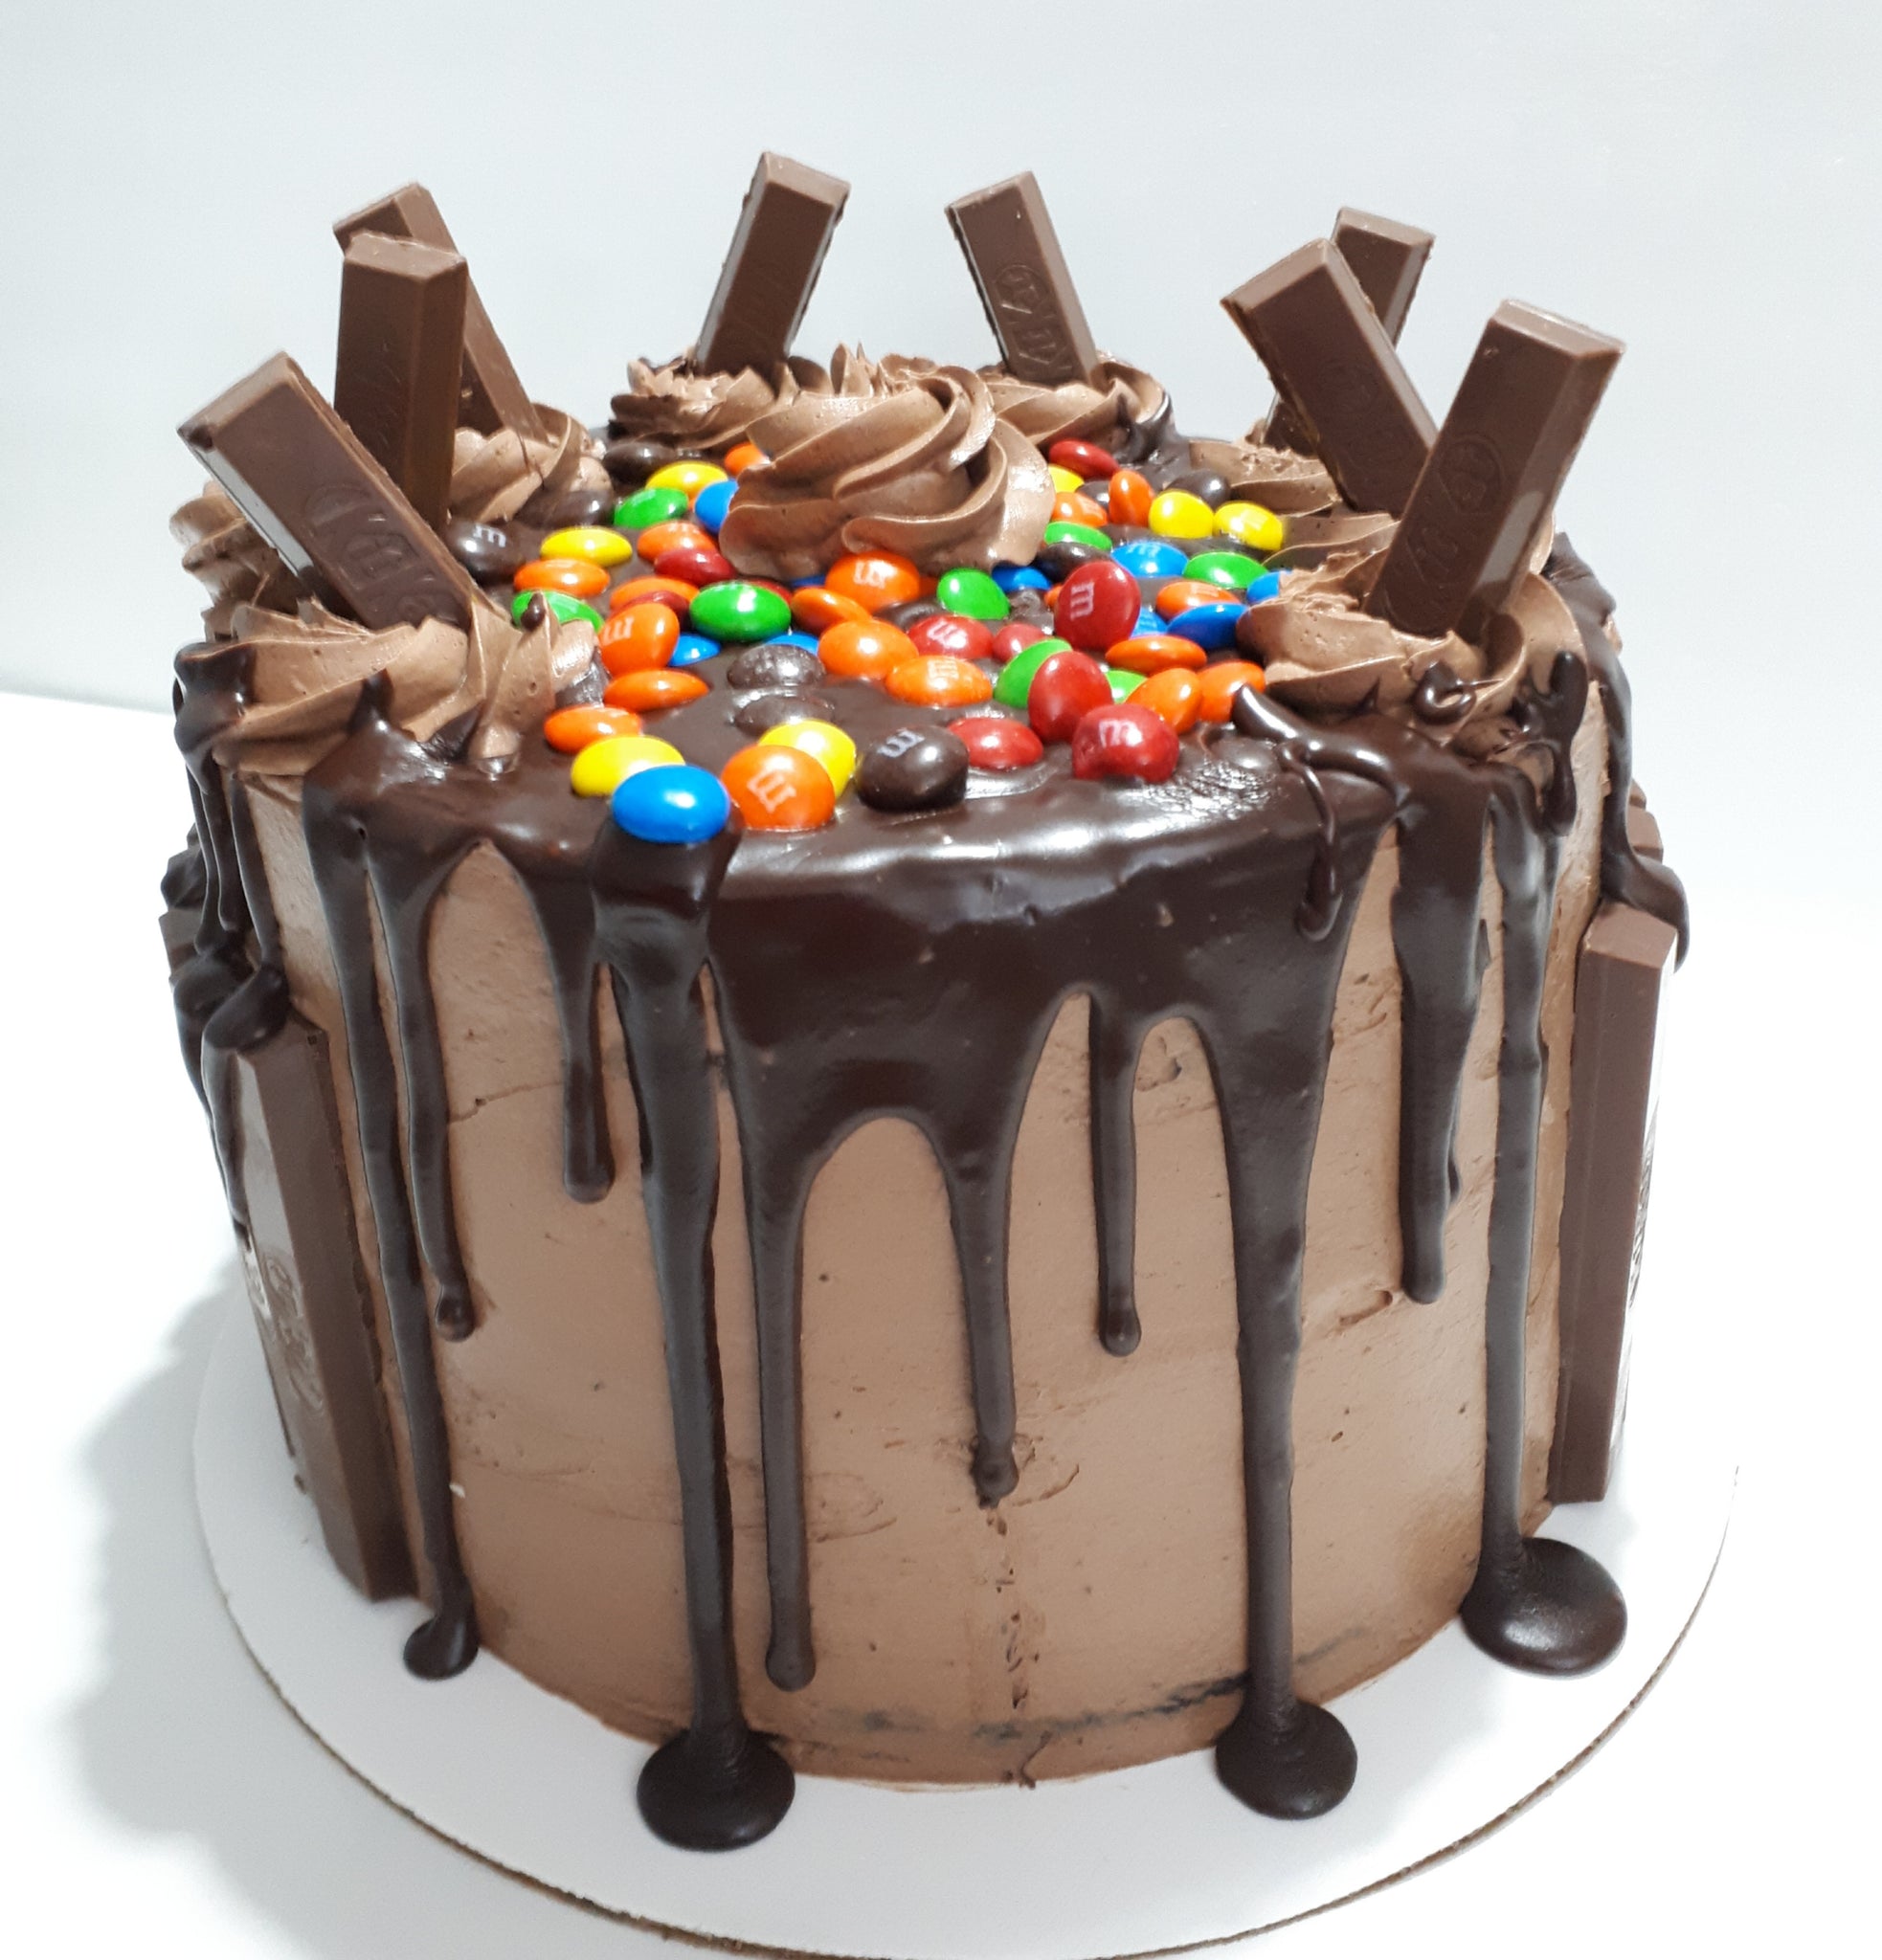 Chocolate Cake with Oreo Cookie and Chocolate bars